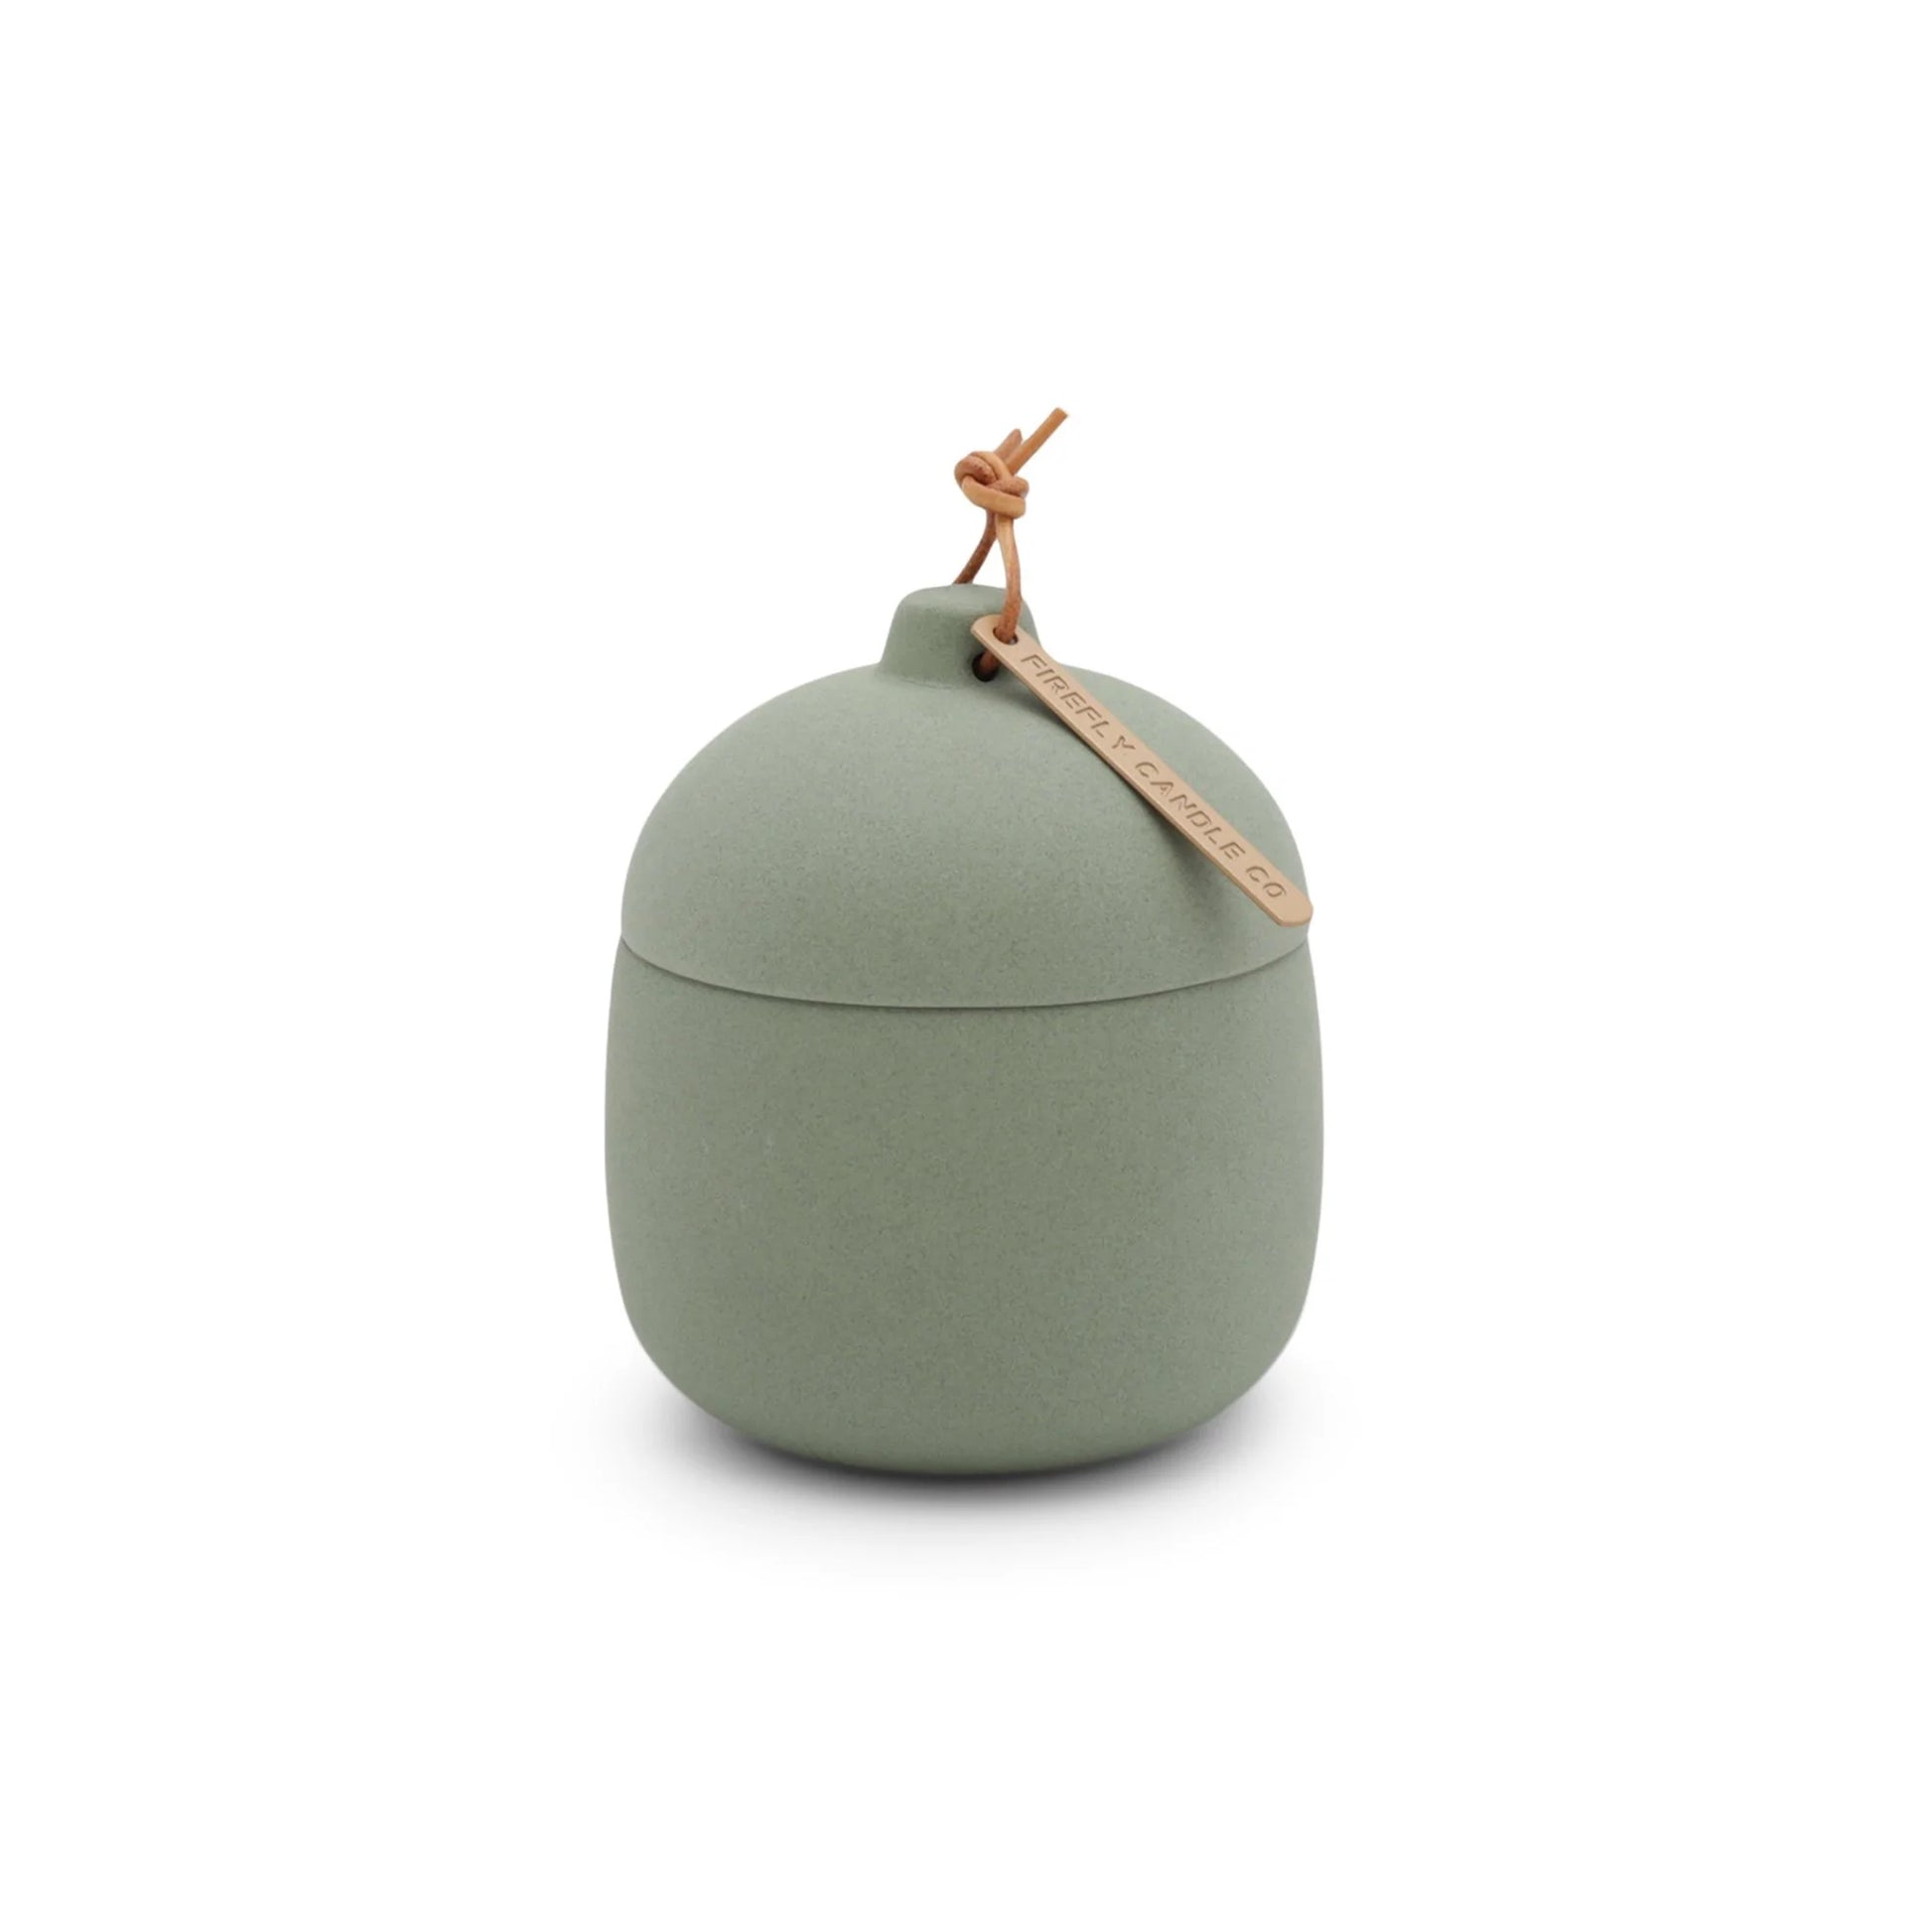 Keepsake 4 oz Candle - Fresh Cut Basil - green colored clay vessel